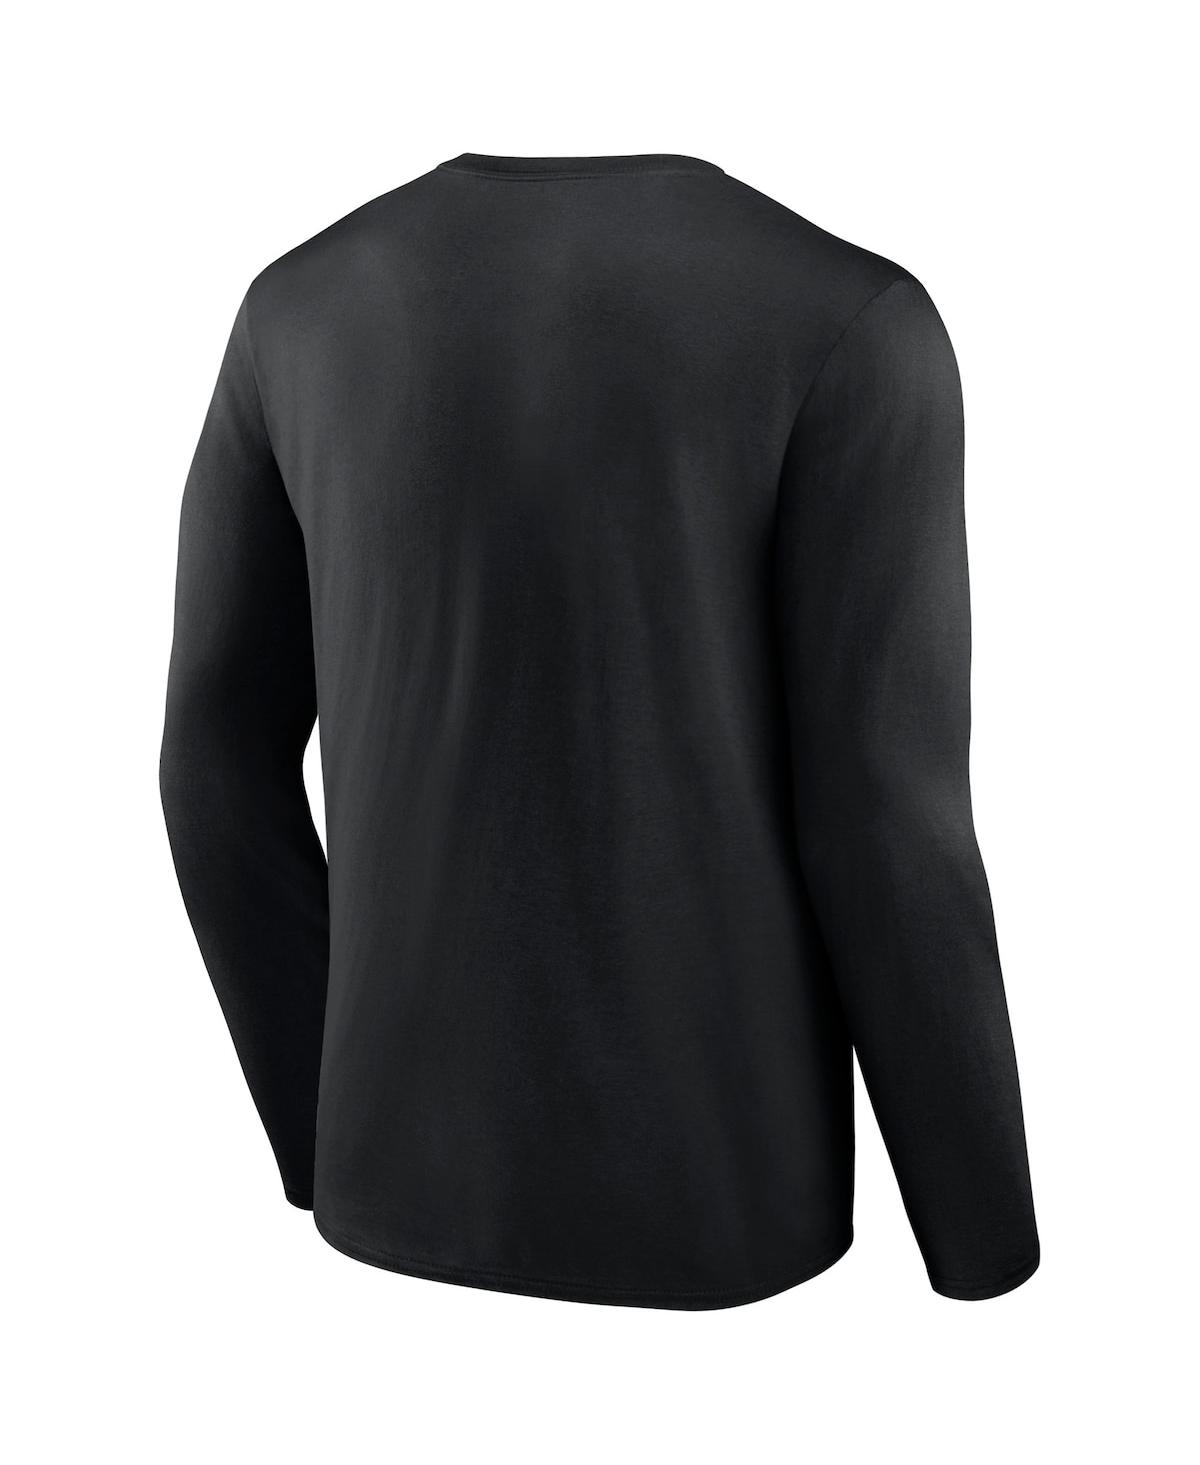 Shop Fanatics Men's  Black Lafc 2022 Mls Western Conference Champions Locker Room Long Sleeve T-shirt